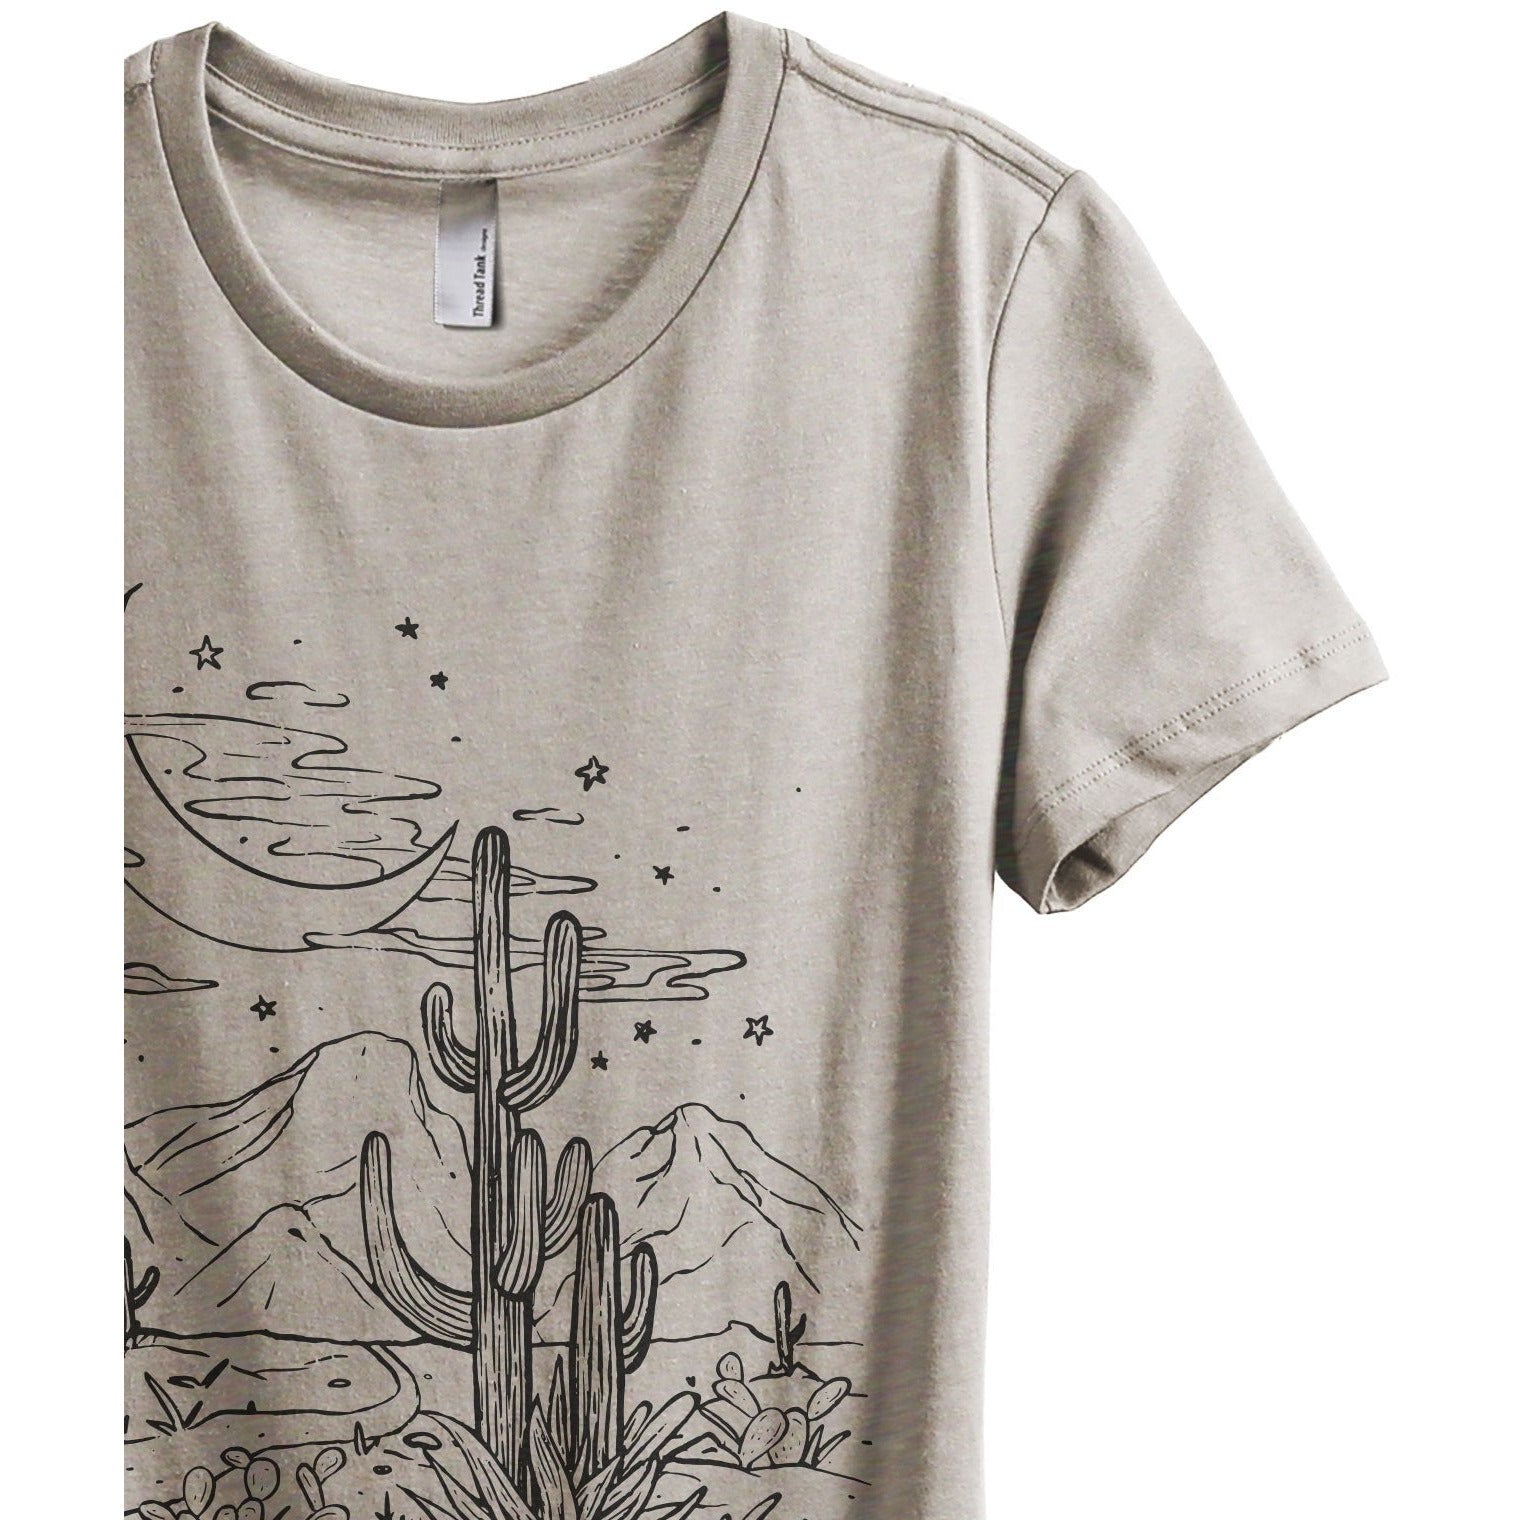 Desert Dreams Women's Relaxed Crewneck T-Shirt Top Tee Charcoal Grey
